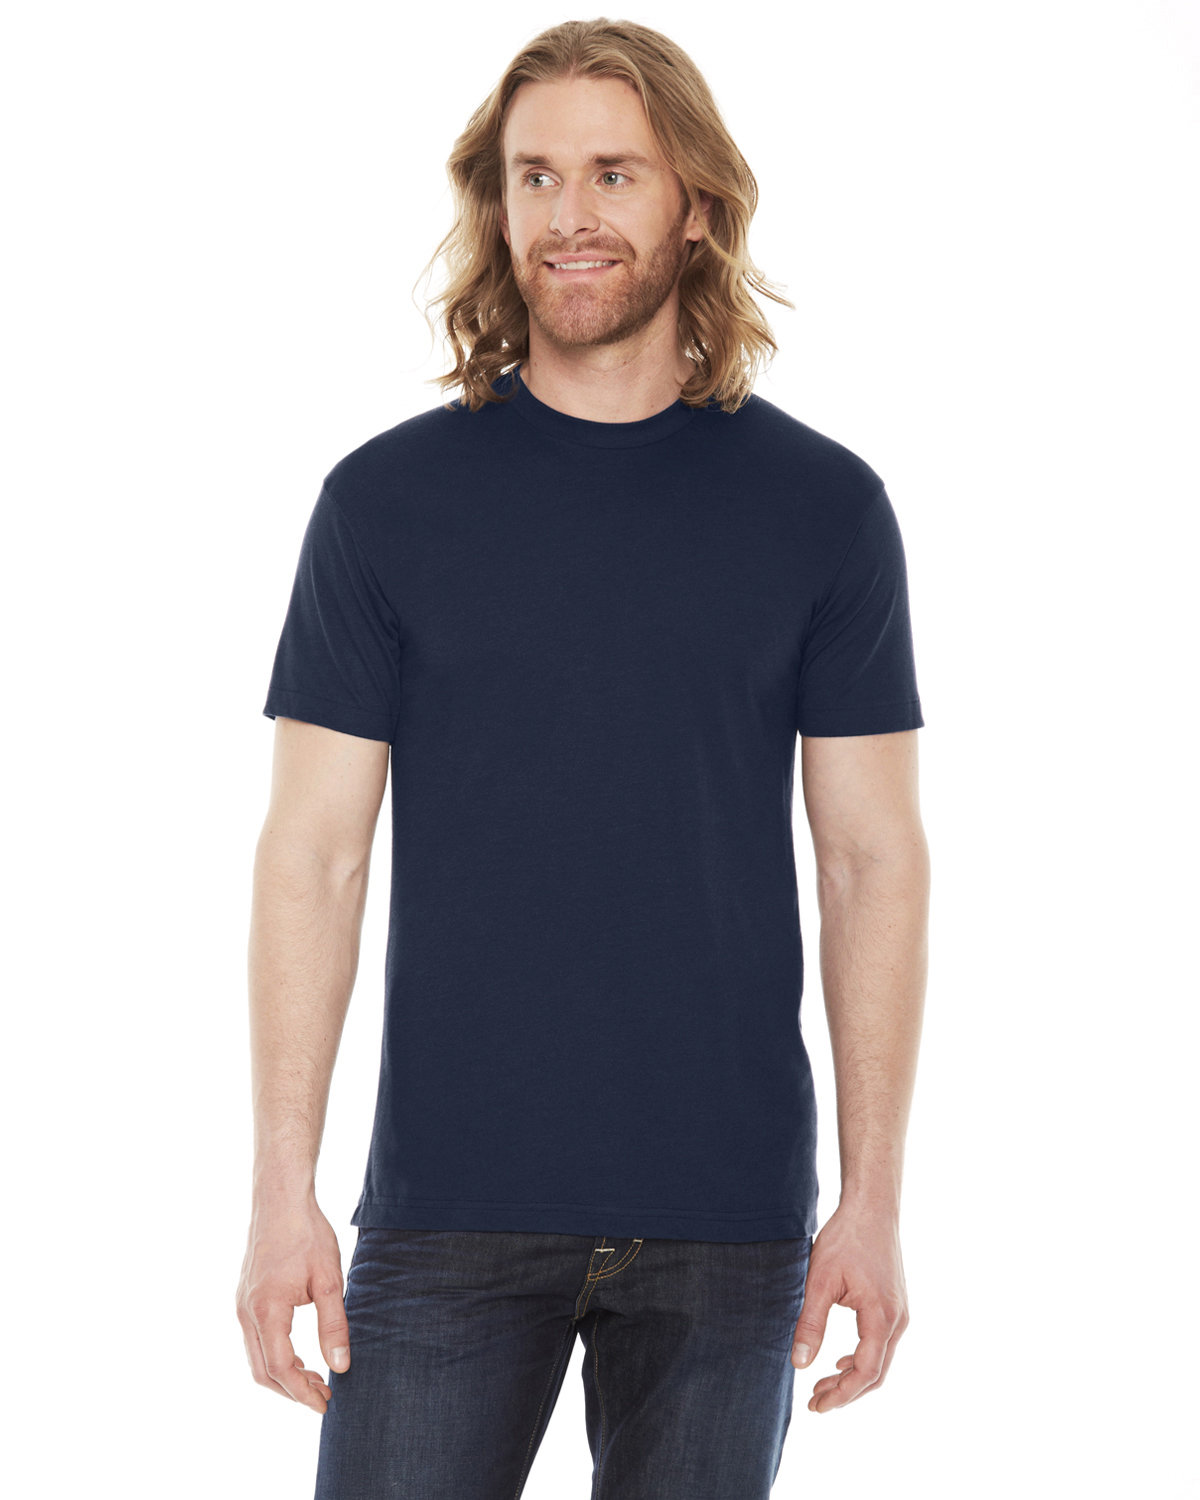 American Apparel Unisex Classic T-Shirt NAVY 